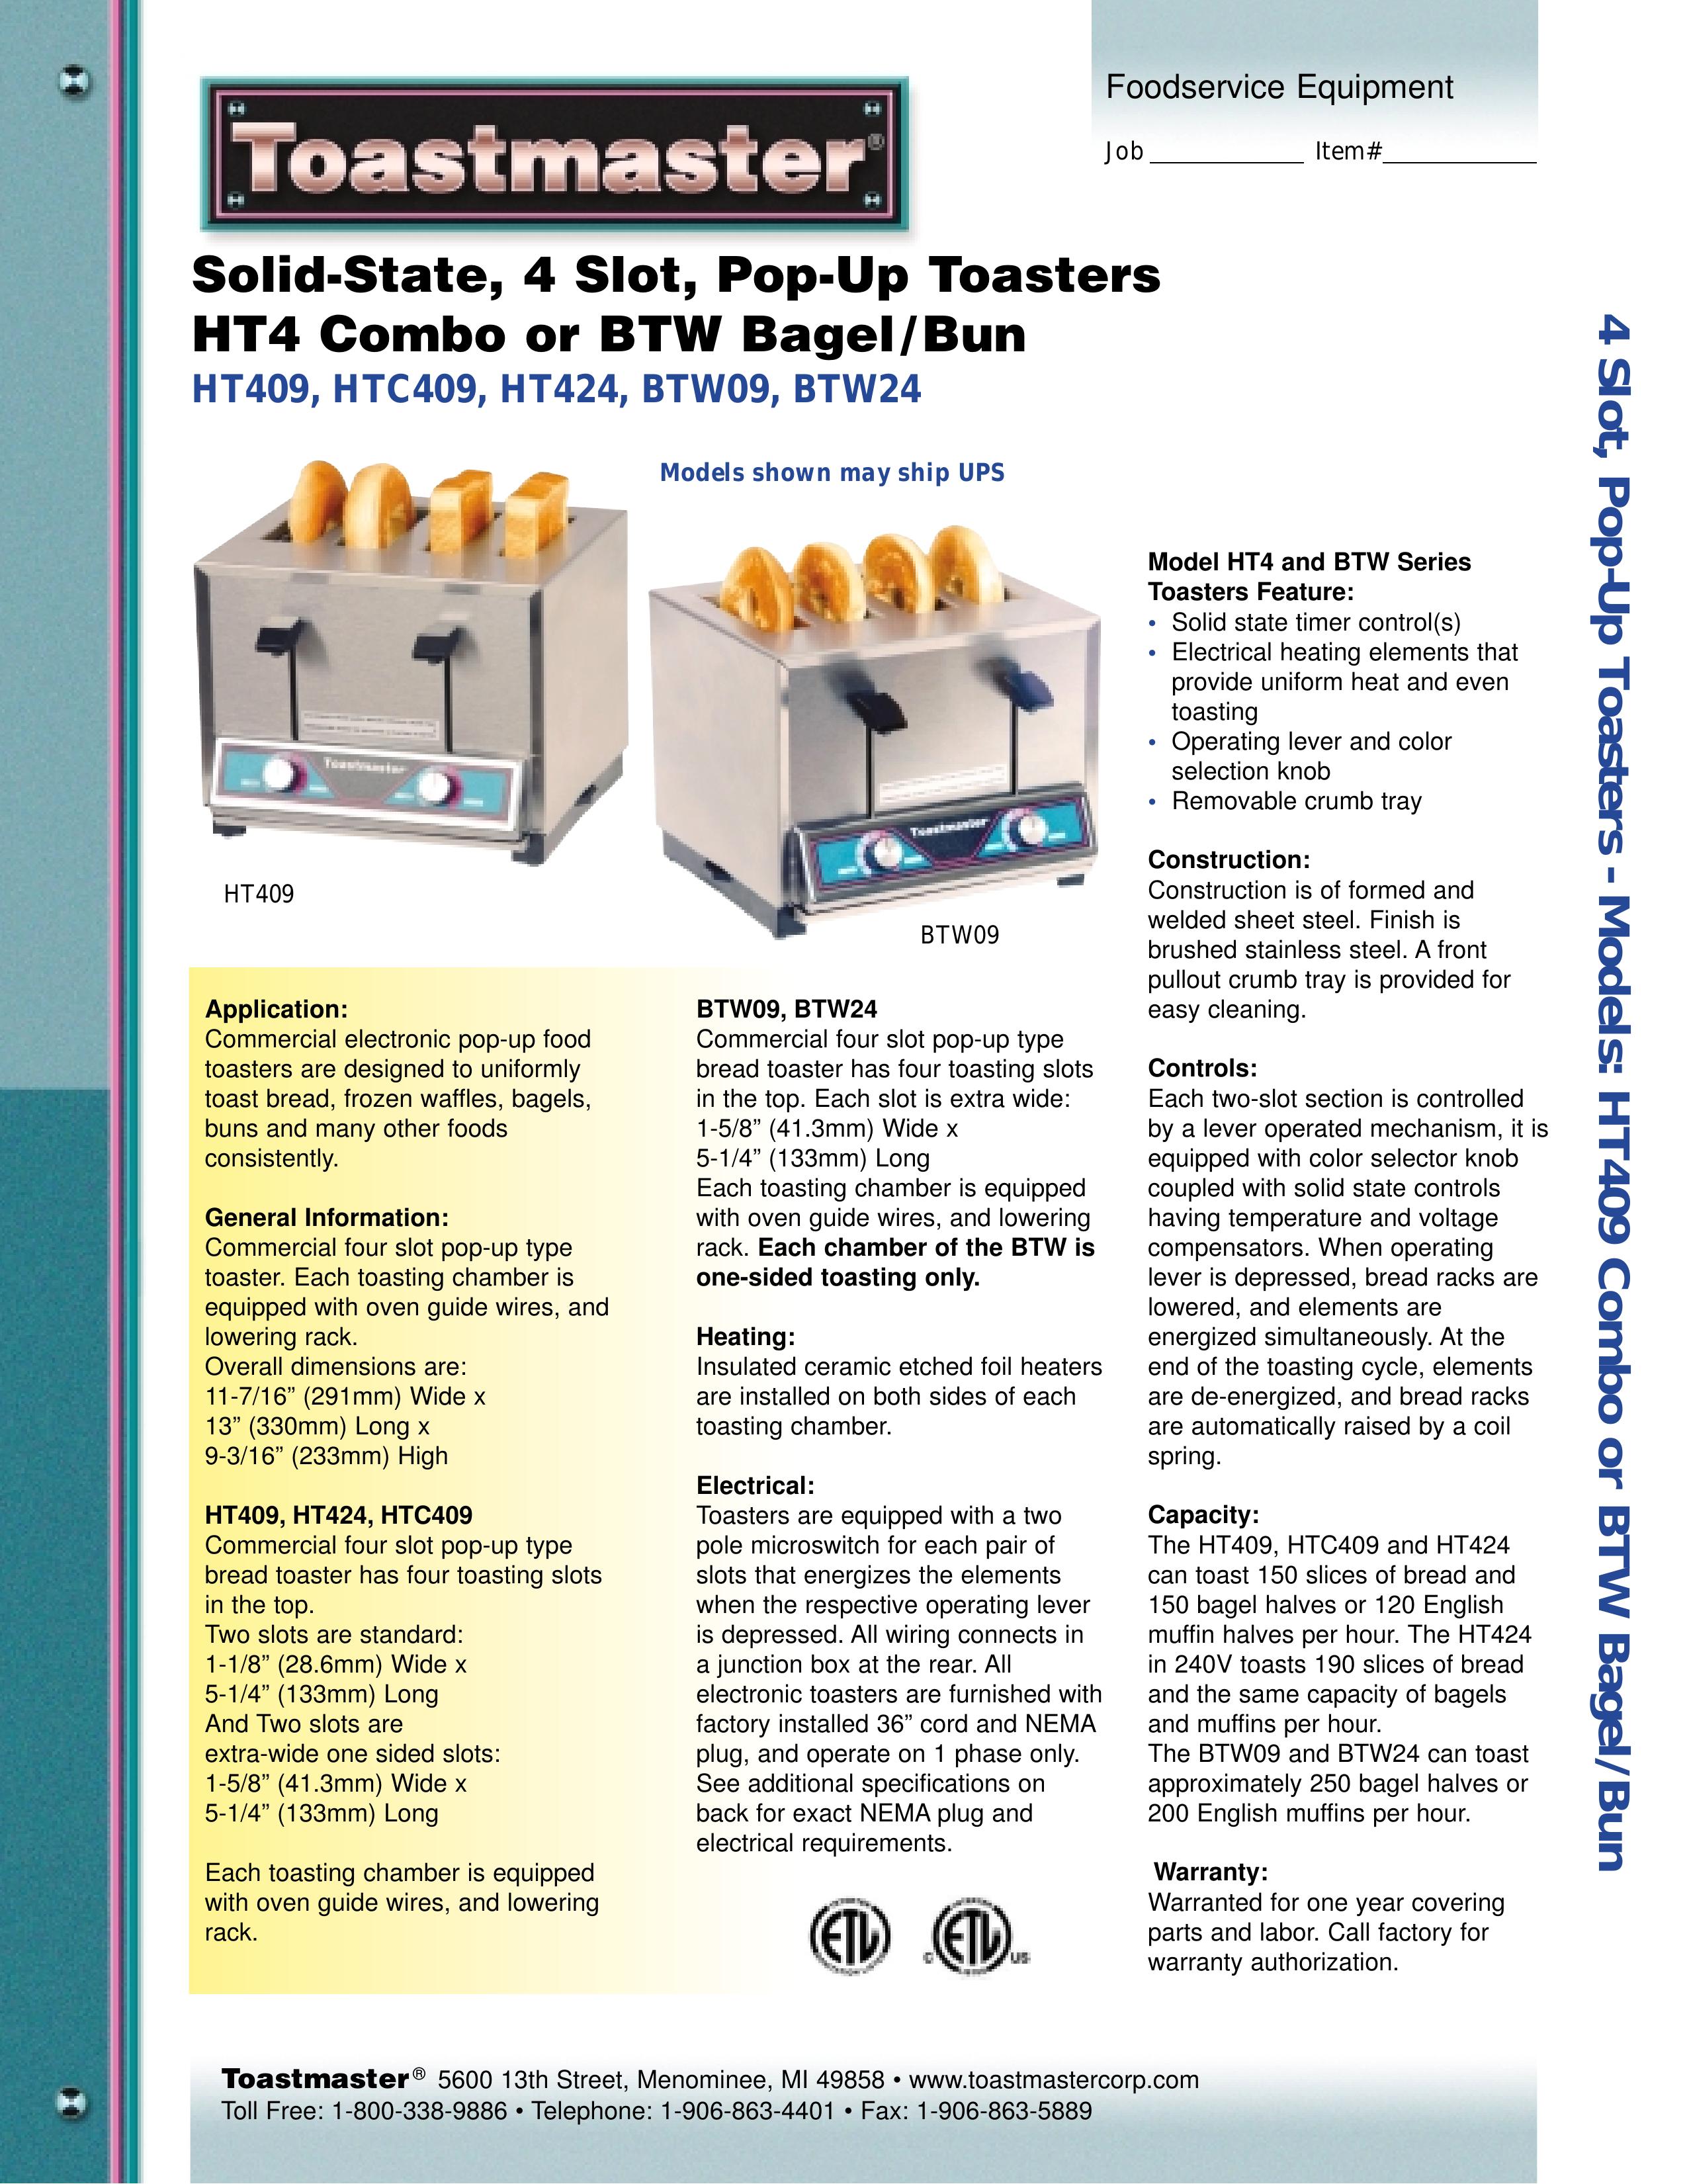 Toastmaster HT424 Toaster User Manual